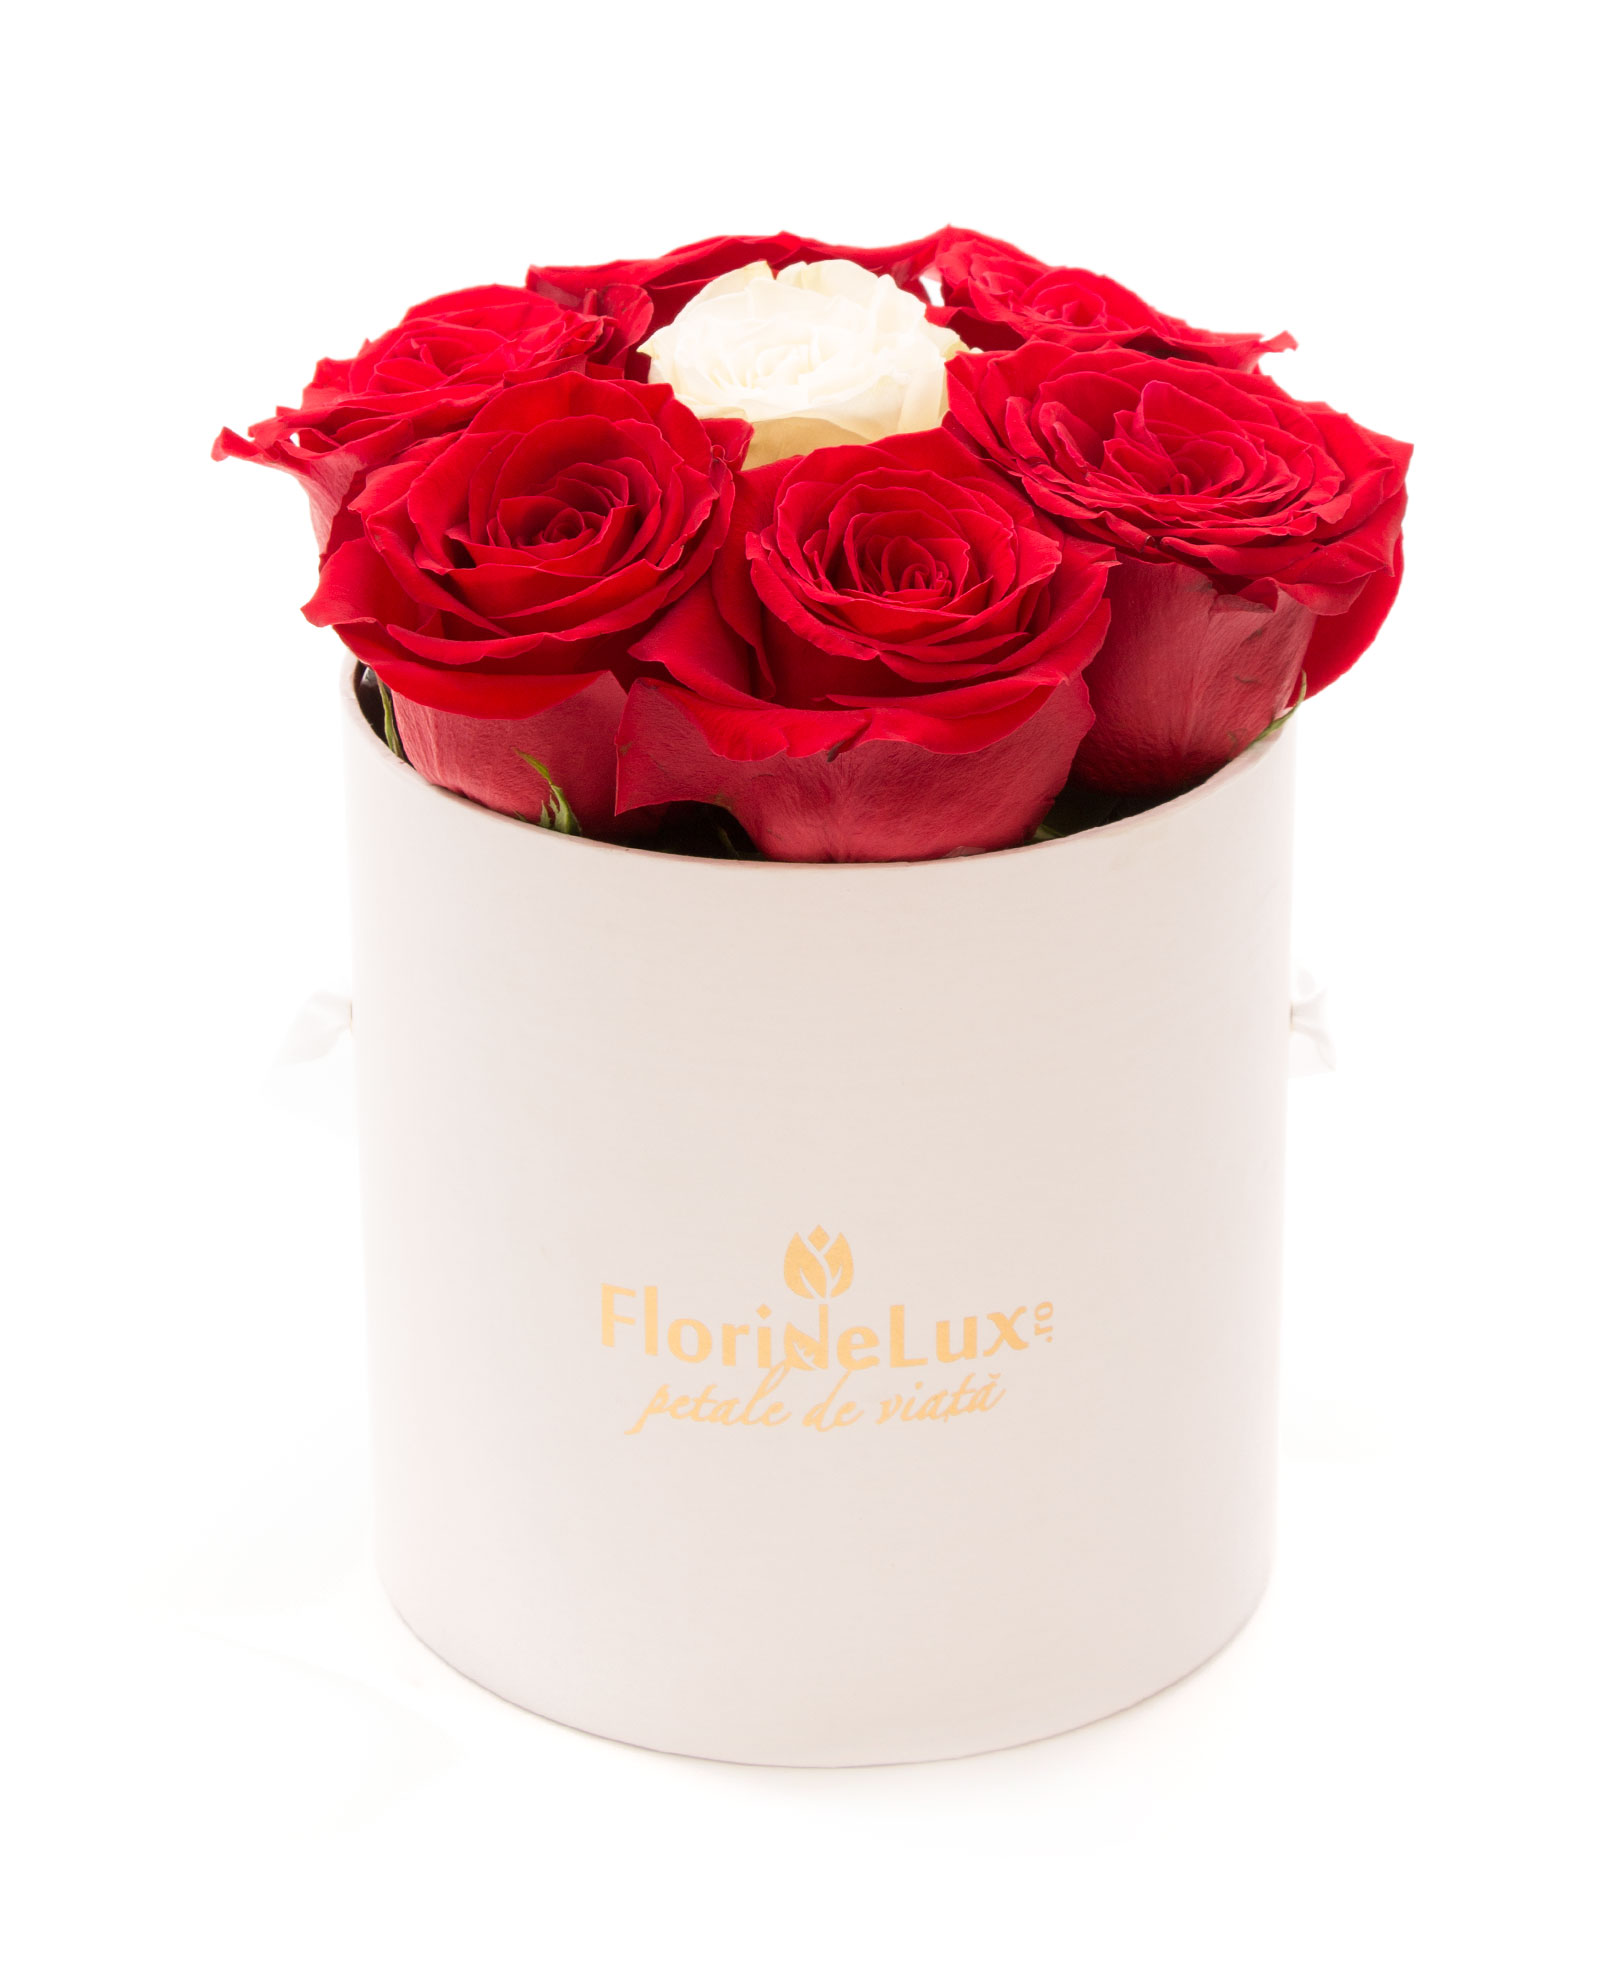 Cutie 9 trandafiri rosii si unul alb si vin Tralca